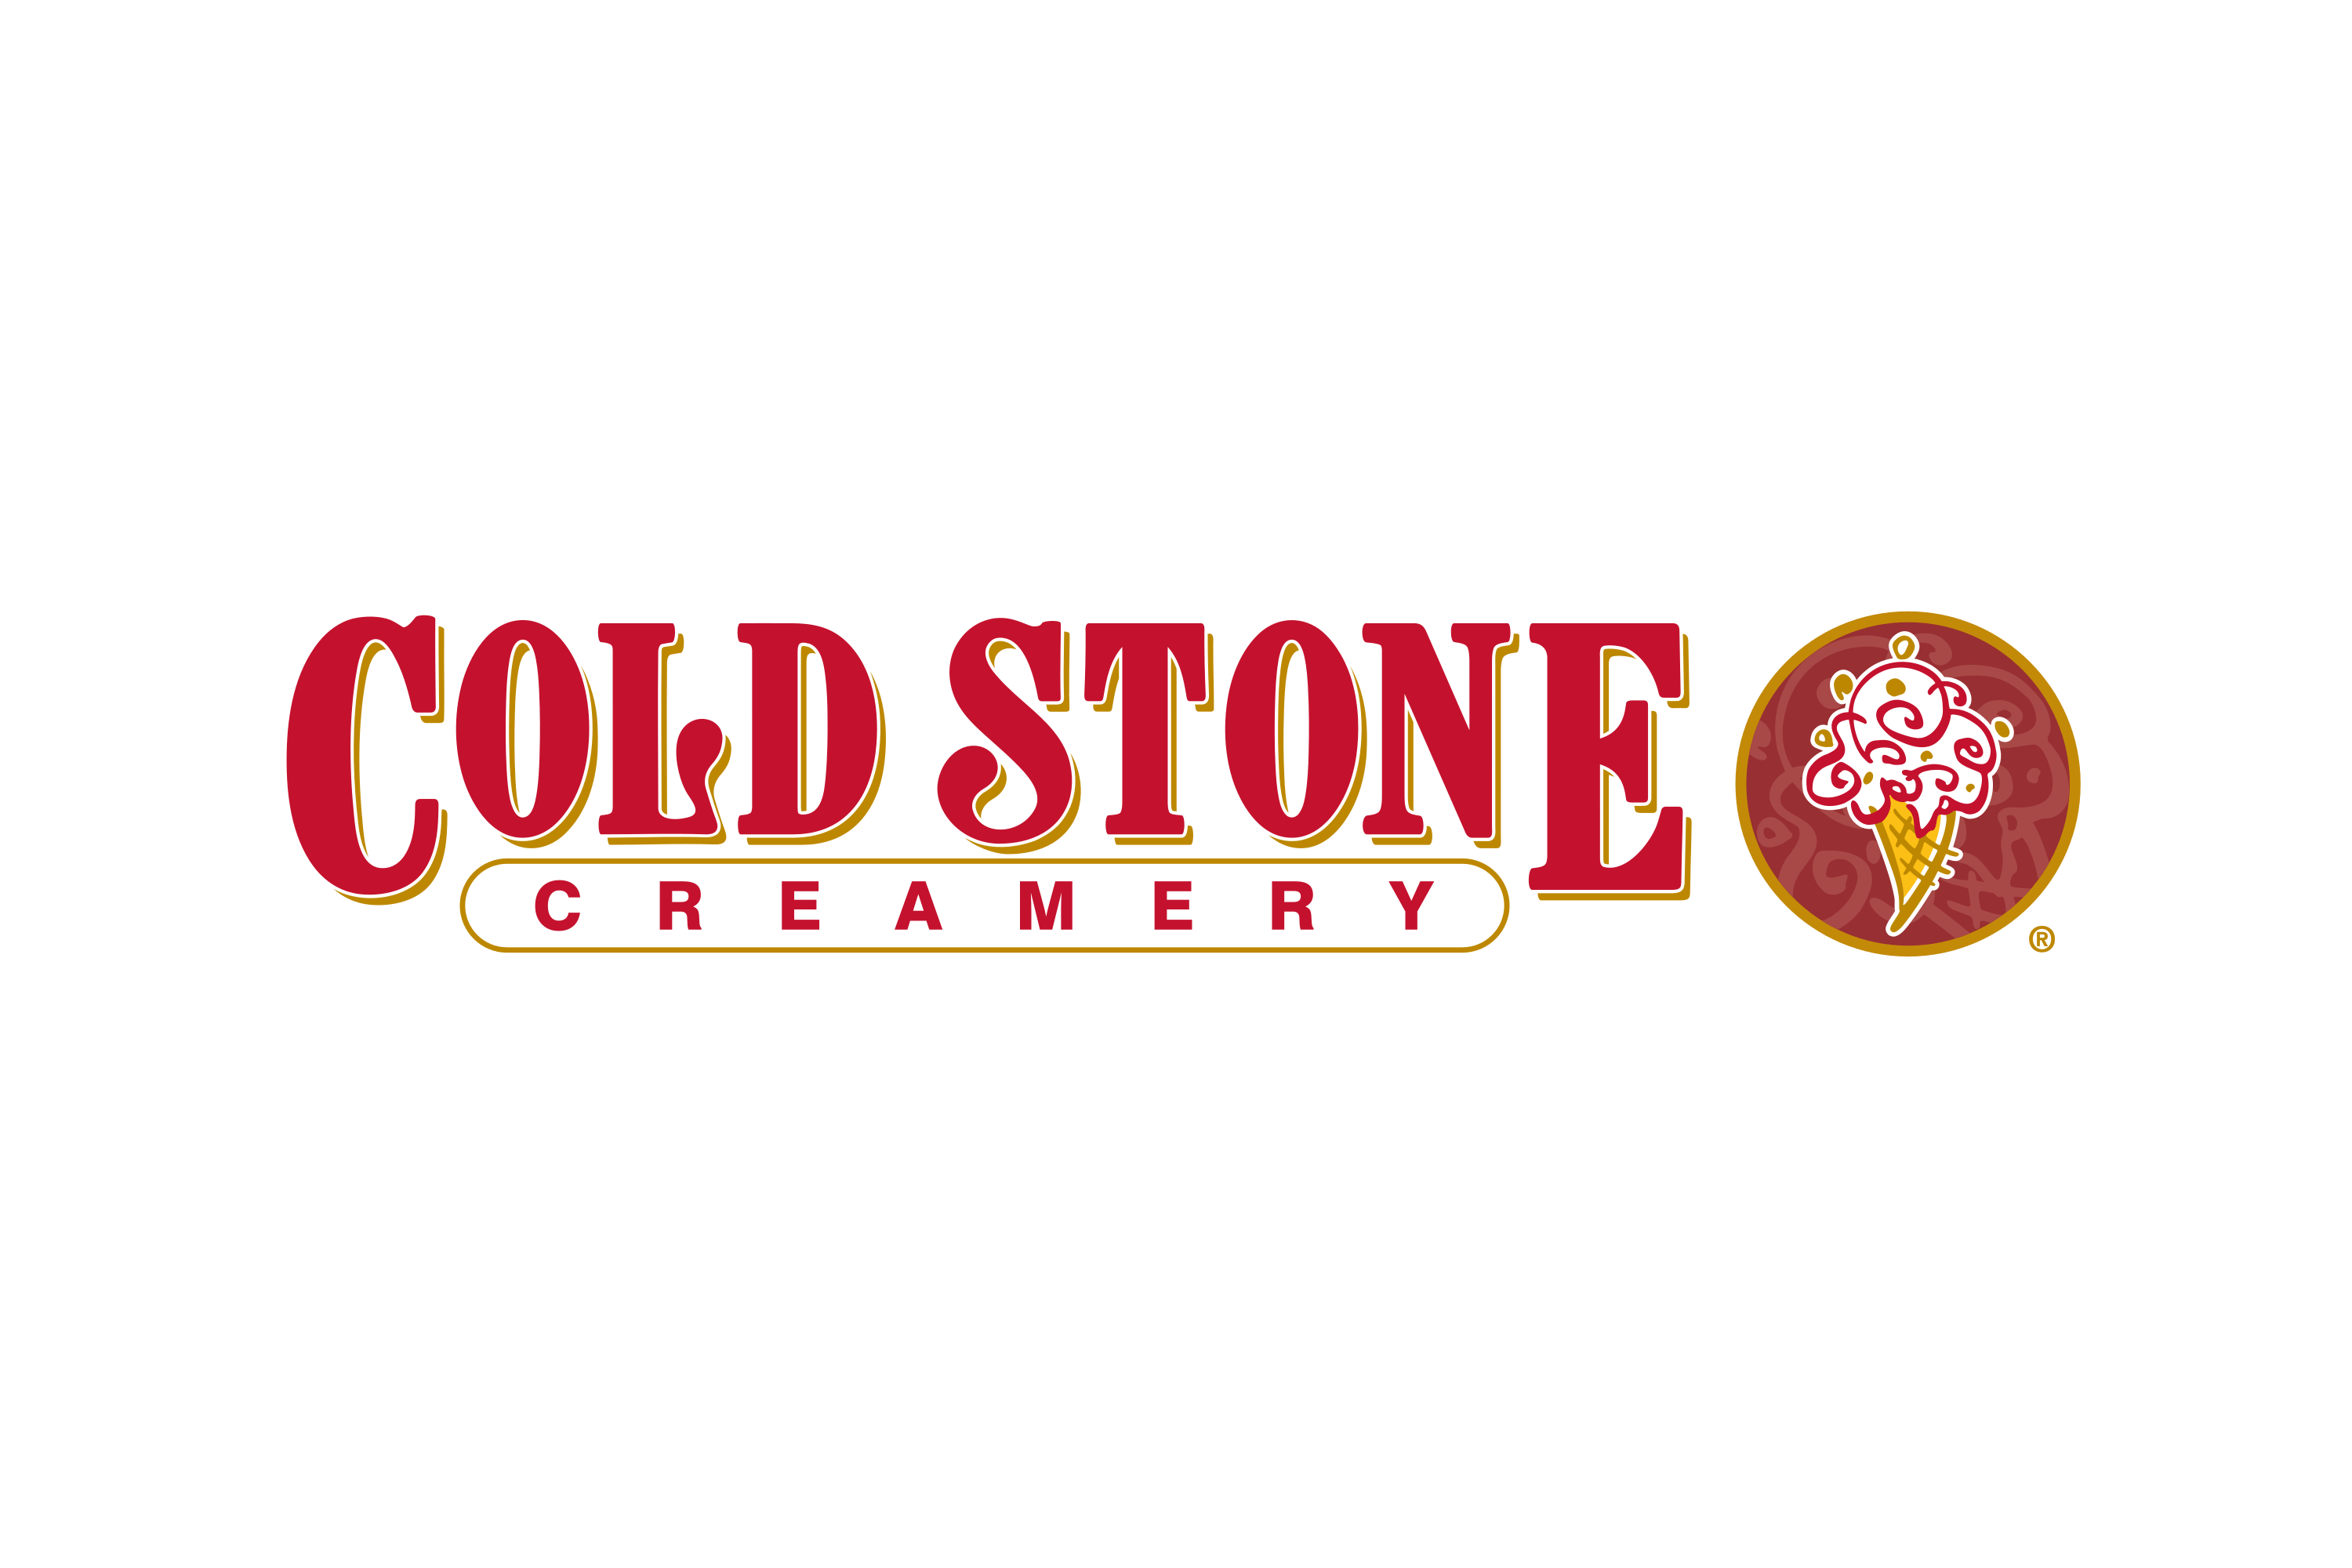 Cold Stone Creamery logo image